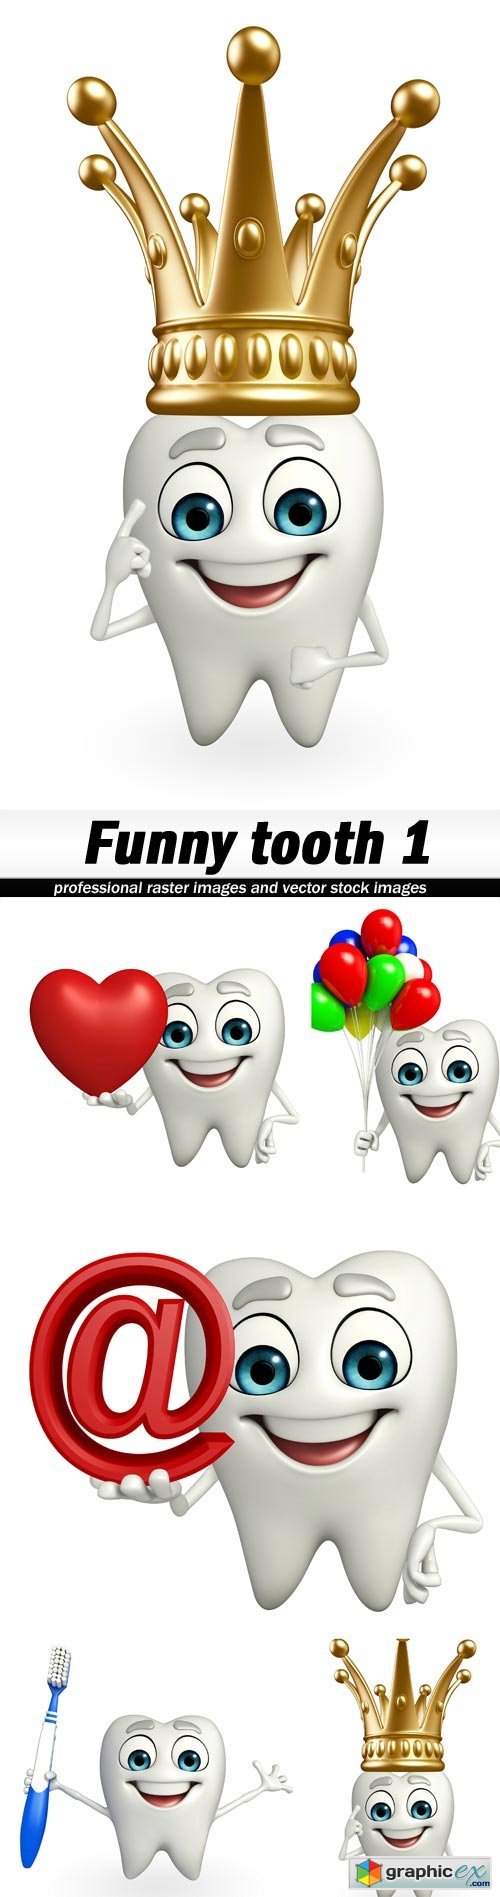 Funny tooth 1 - 5 UHQ JPEG